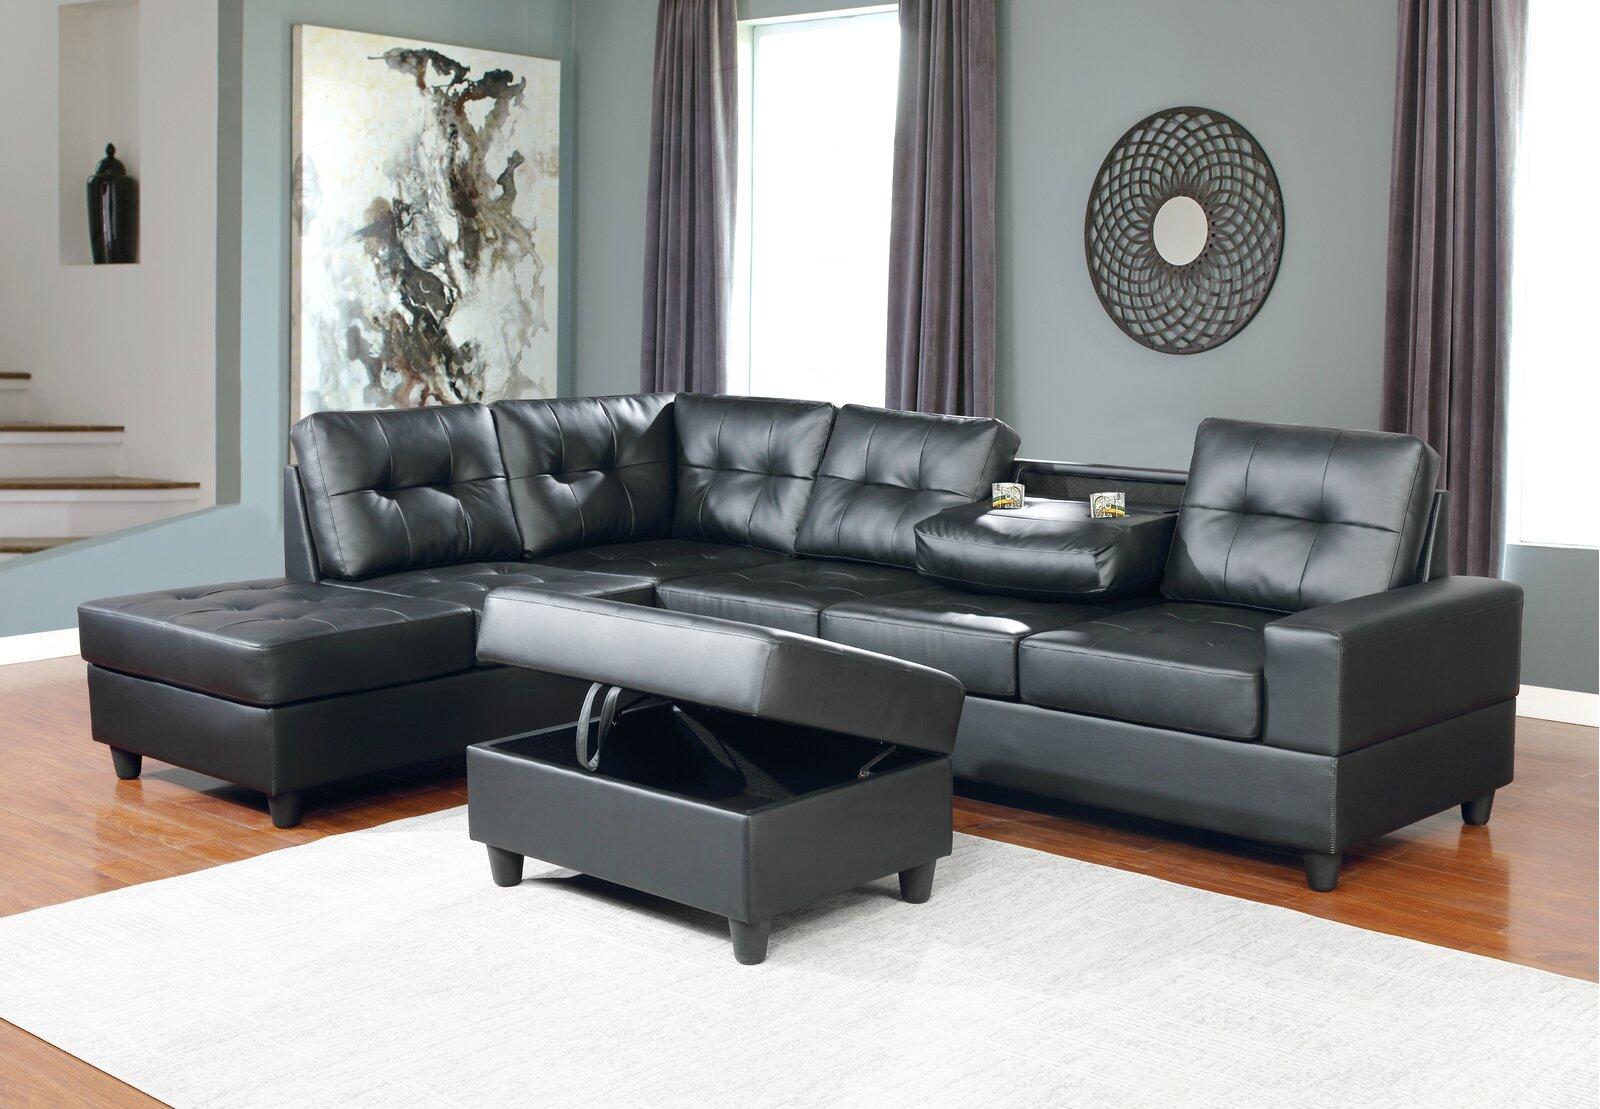 

    
Galaxy Home Furniture BOSTON Sectional Sofa Black GHF-808857868275
